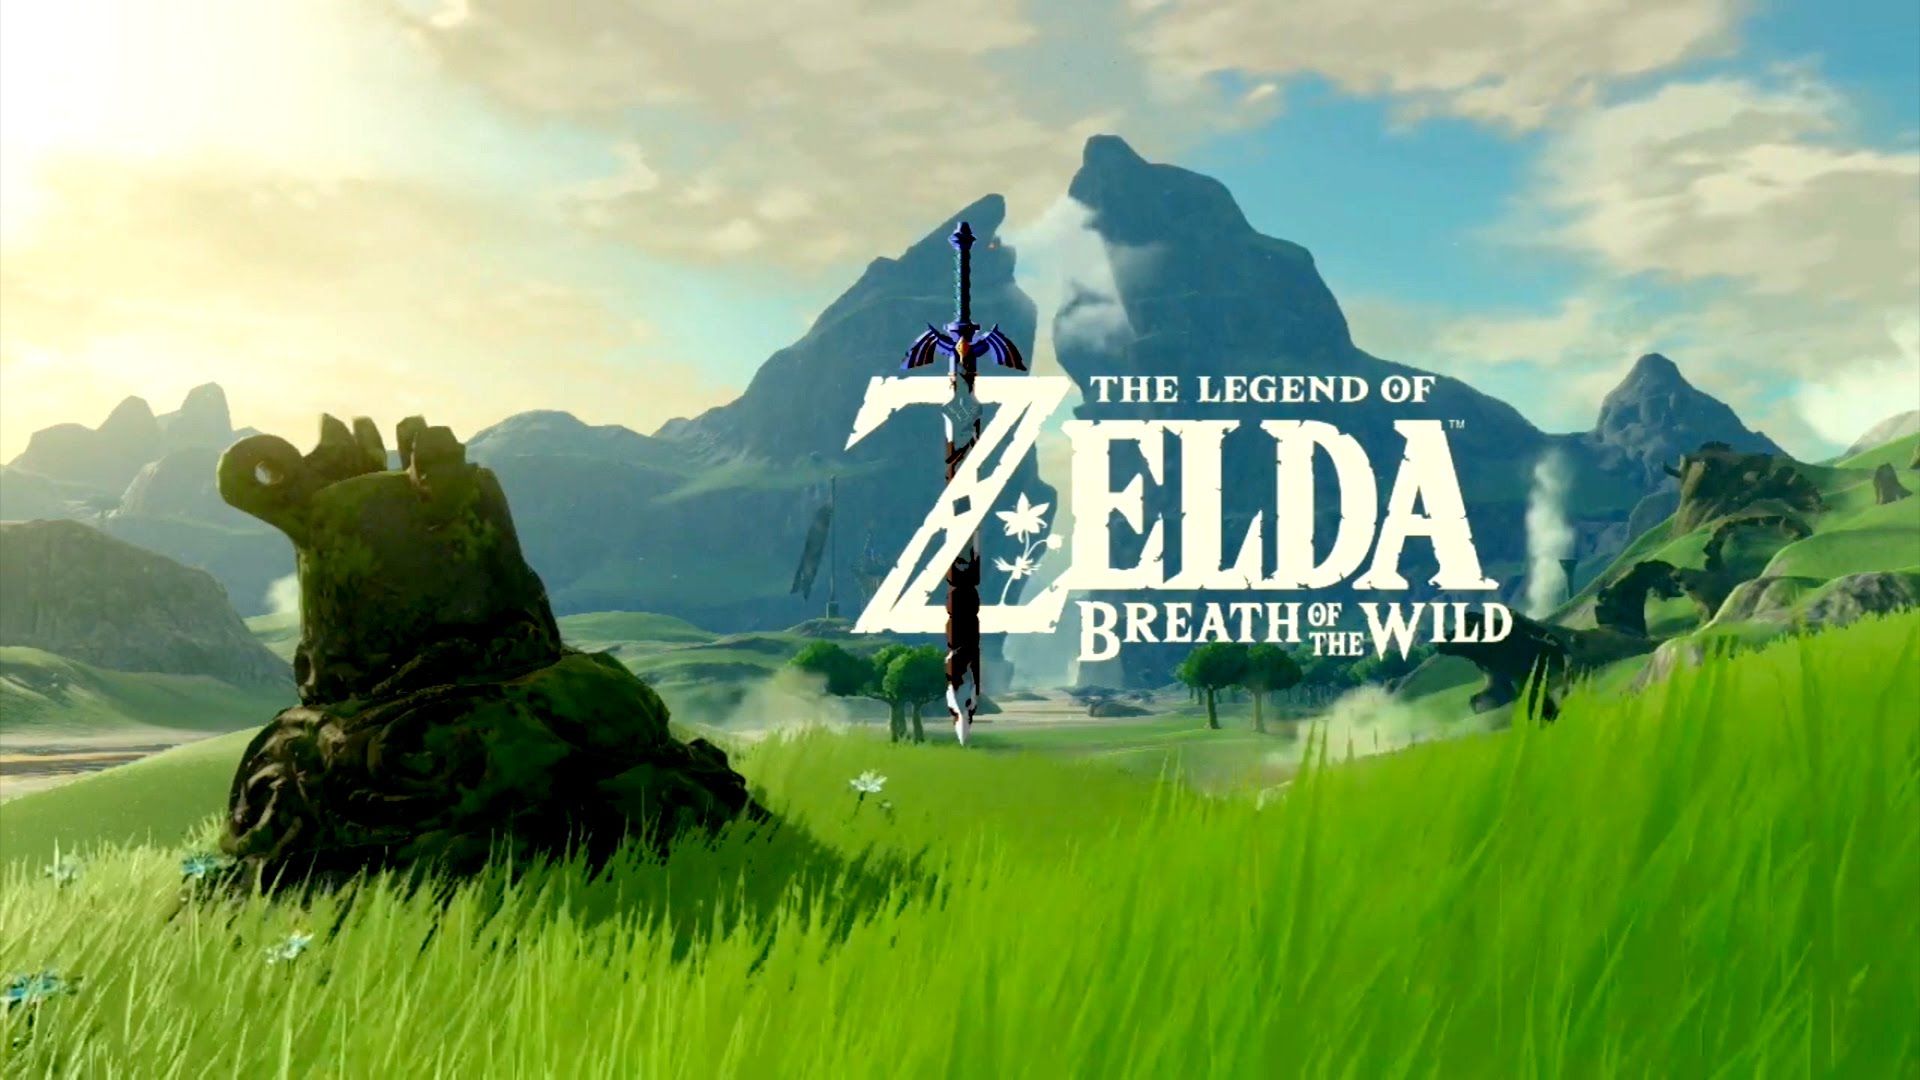 1920x1080 The Legend Of Zelda Breath Of The Wild Wallpaper Video Game Hq The Legend Of Zelda Breath Of The Wild Picture 4k Wallpaper 2019